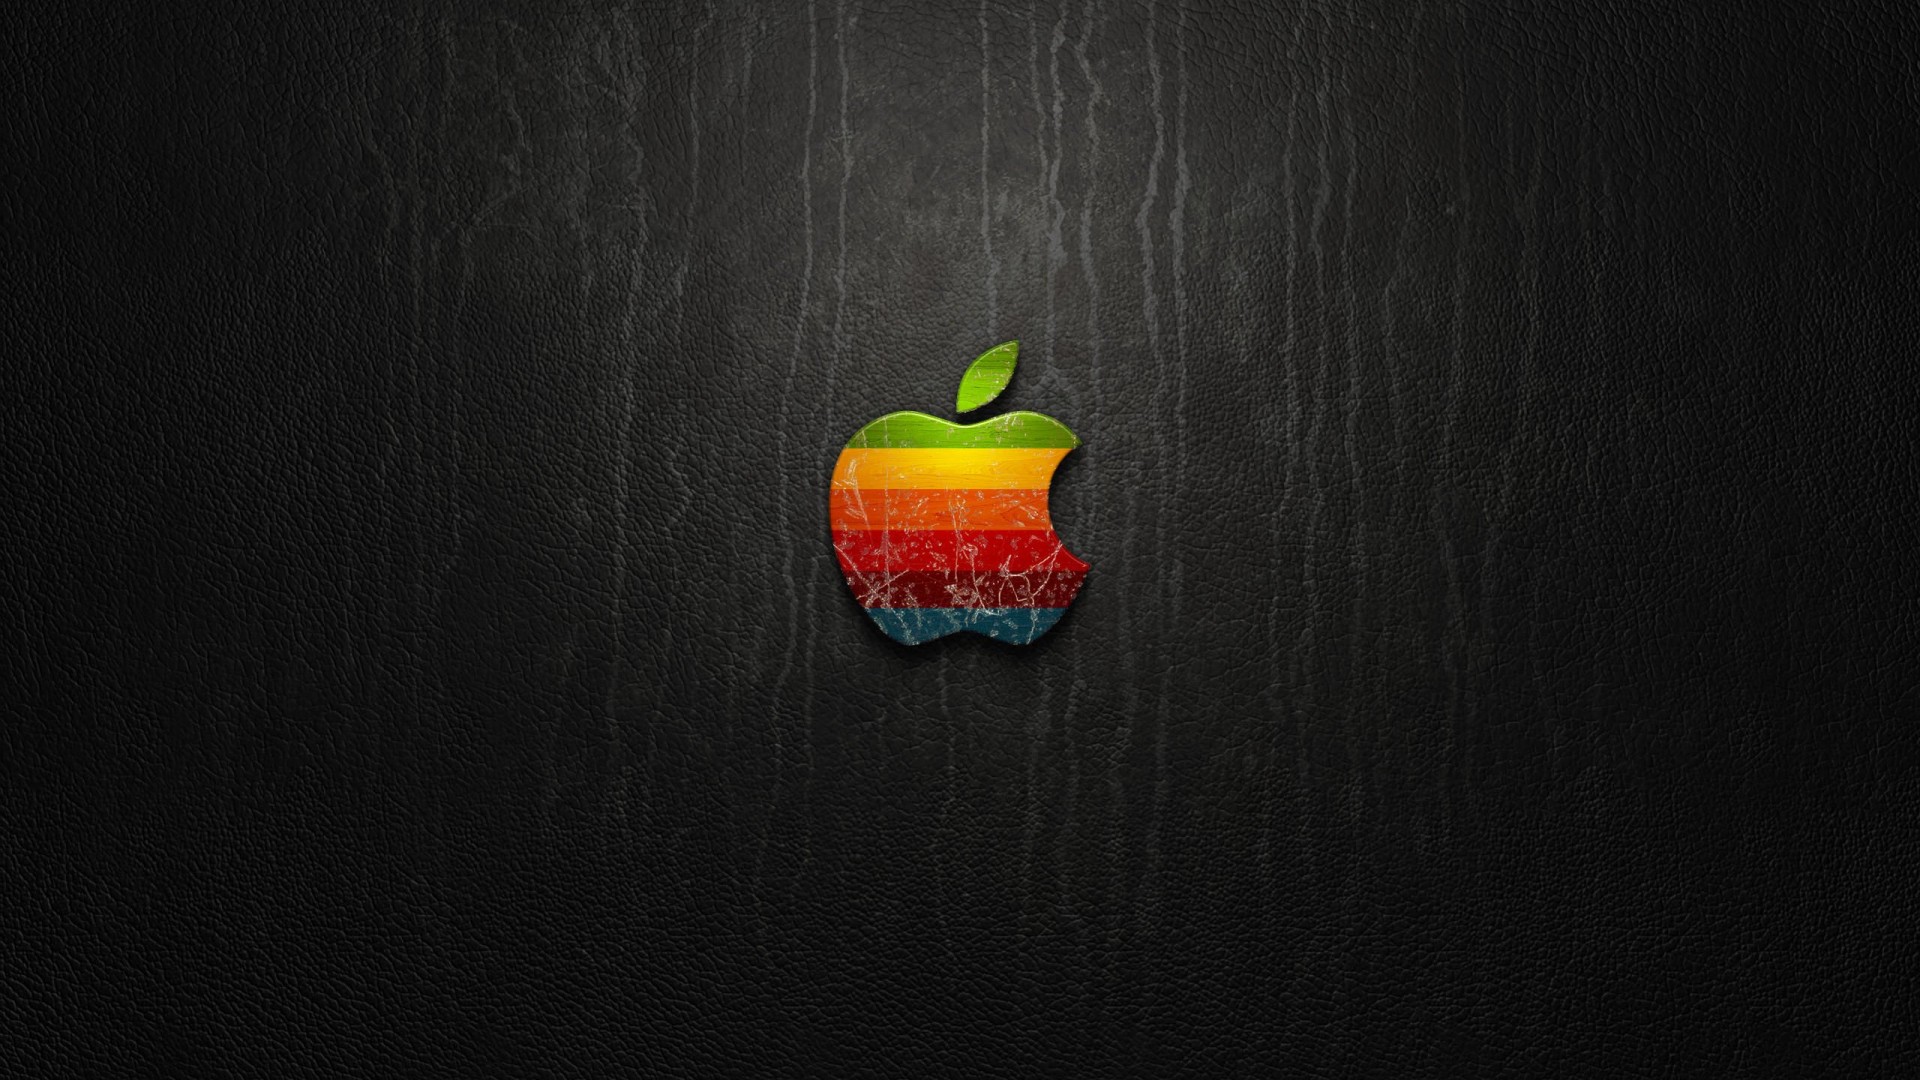 Multicolored Apple Logo Wallpaper for Desktop 1920x1080